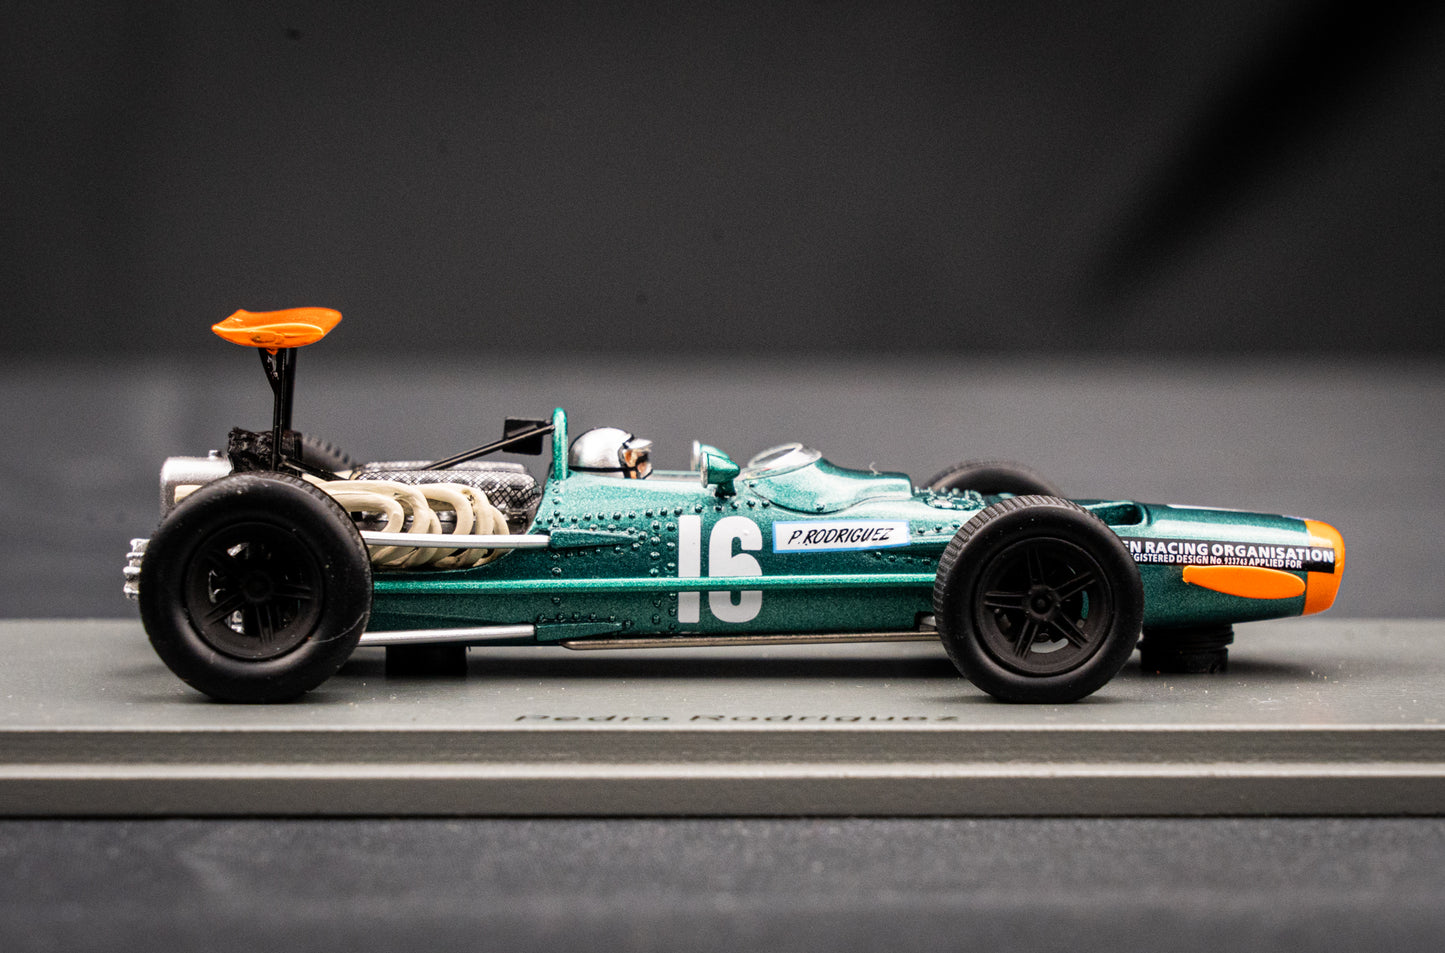 BRM P133 #16 Pedro Rodriguez - 3rd Canadian GP 1968 - Spark 1:43